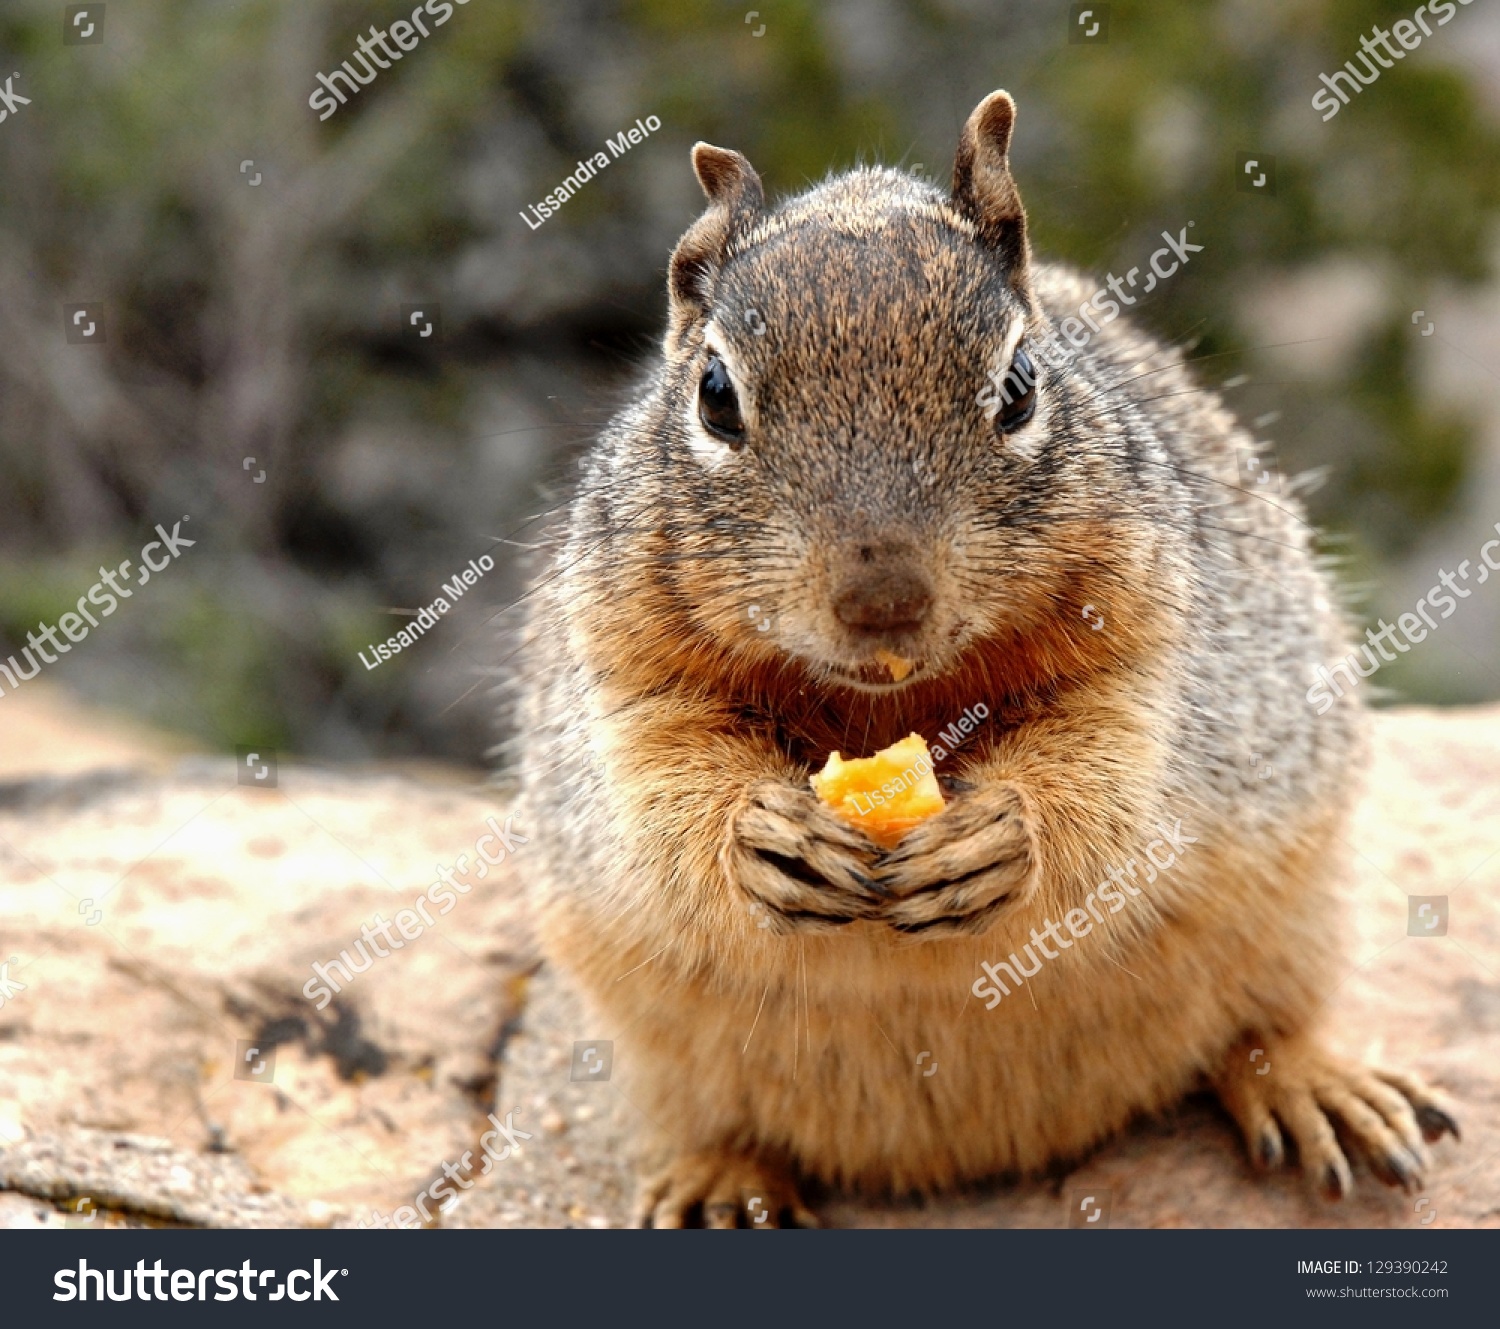 Squirrel eating photo